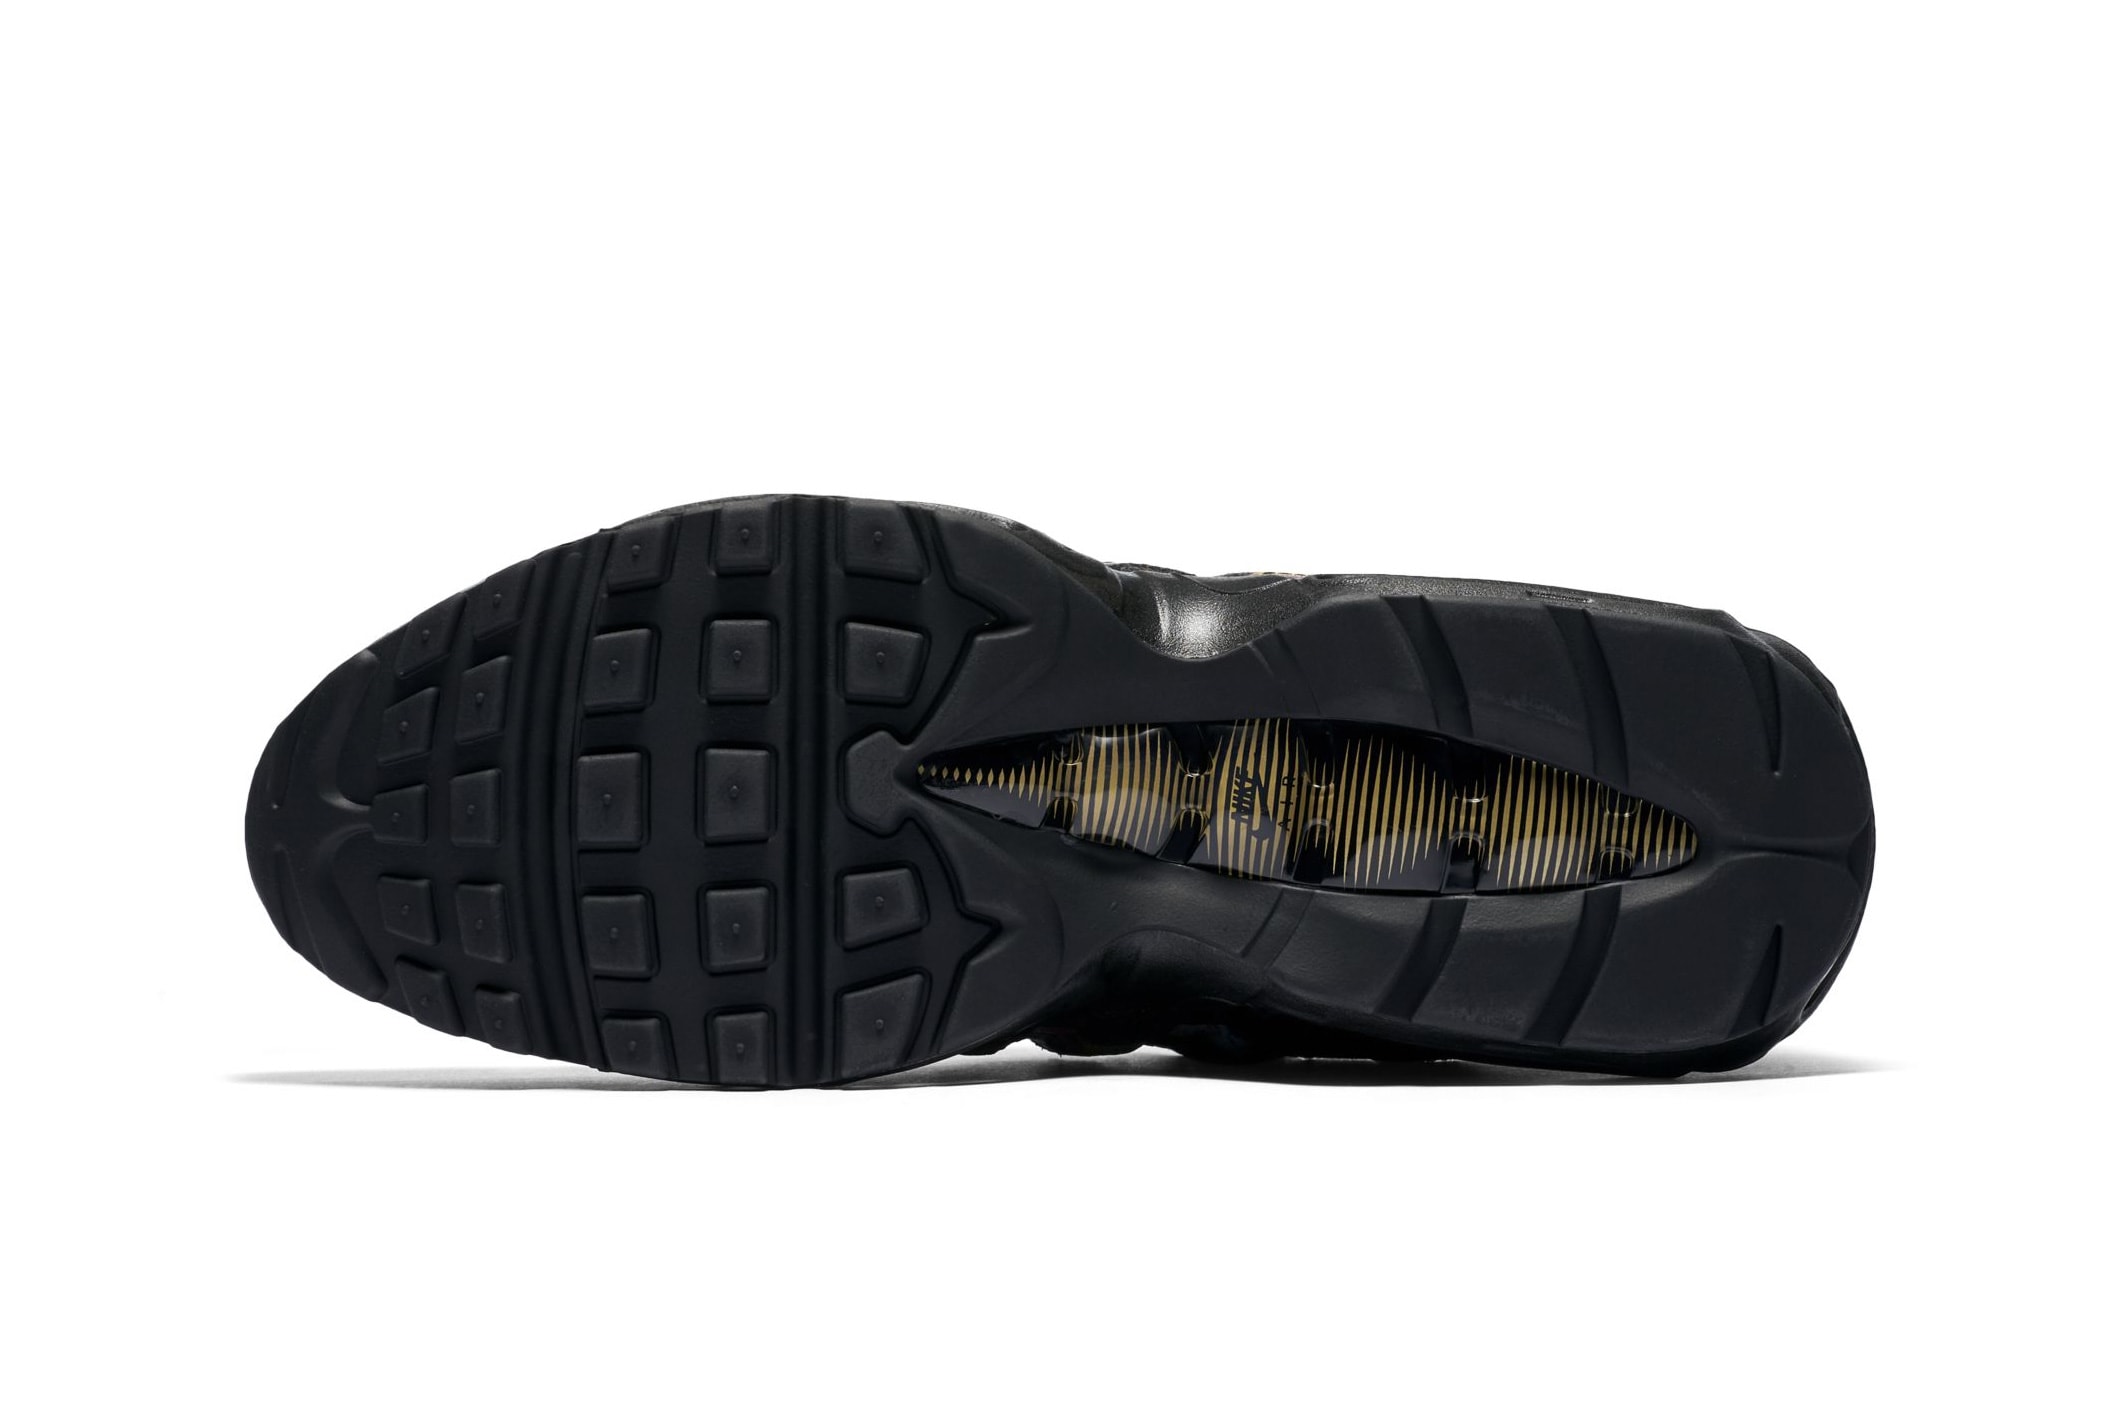 Nike Air Max 95 "Metallic Gold/Cobalt Blaze" Paint Splatter Colorway first look sneaker multicolor black gold